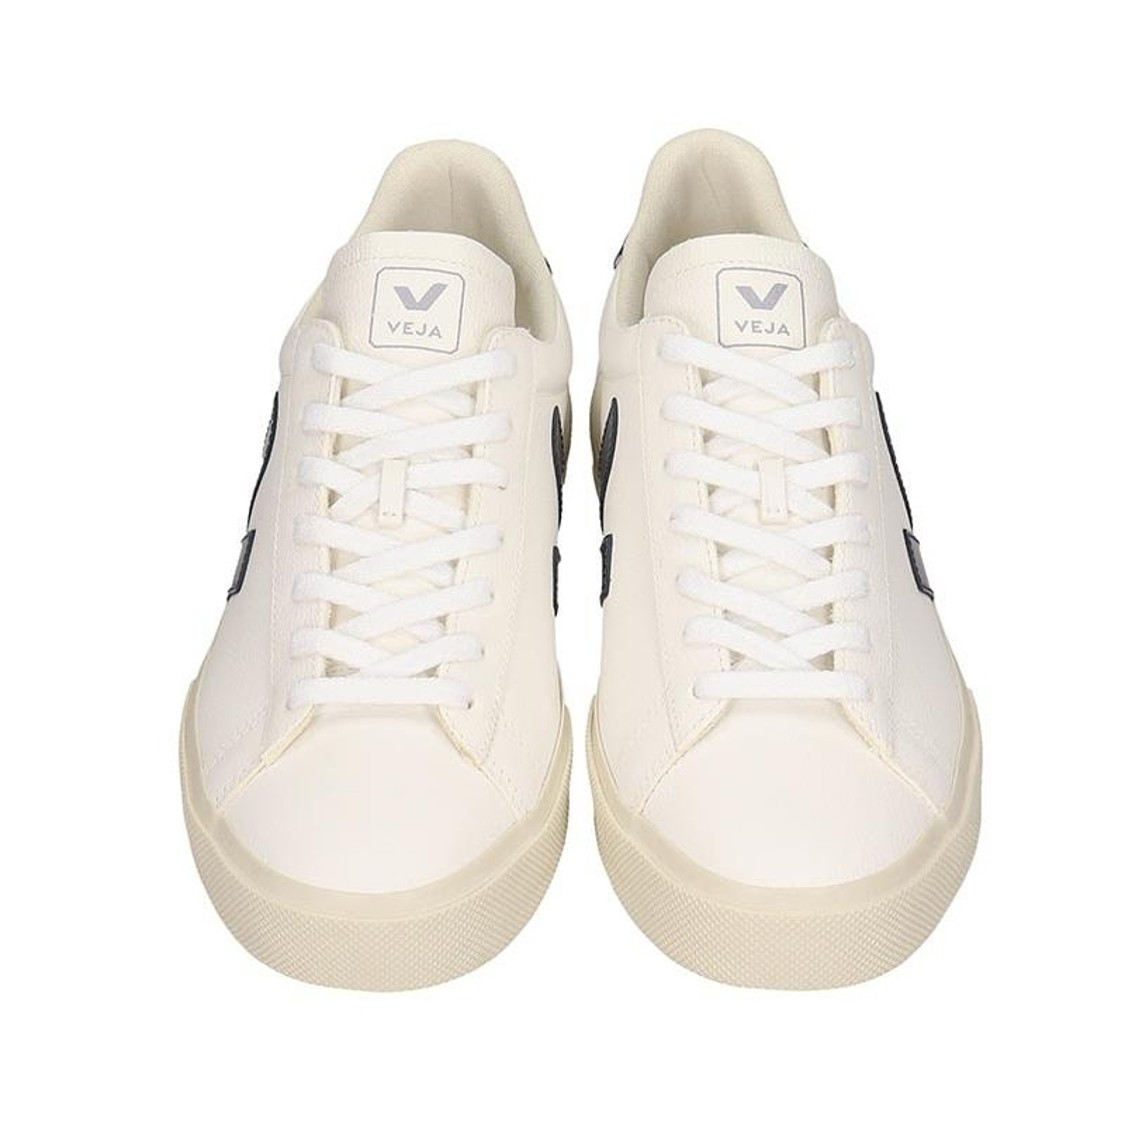 shop VEJA  Scarpe: Veja sneaker bianche.
Modello Campo easy in pelle bianca con logo blu.
Suola in gomma.
Logo su linguetta tomaia.
made in Brasil.. CPM052058-CAMPO number 3694356